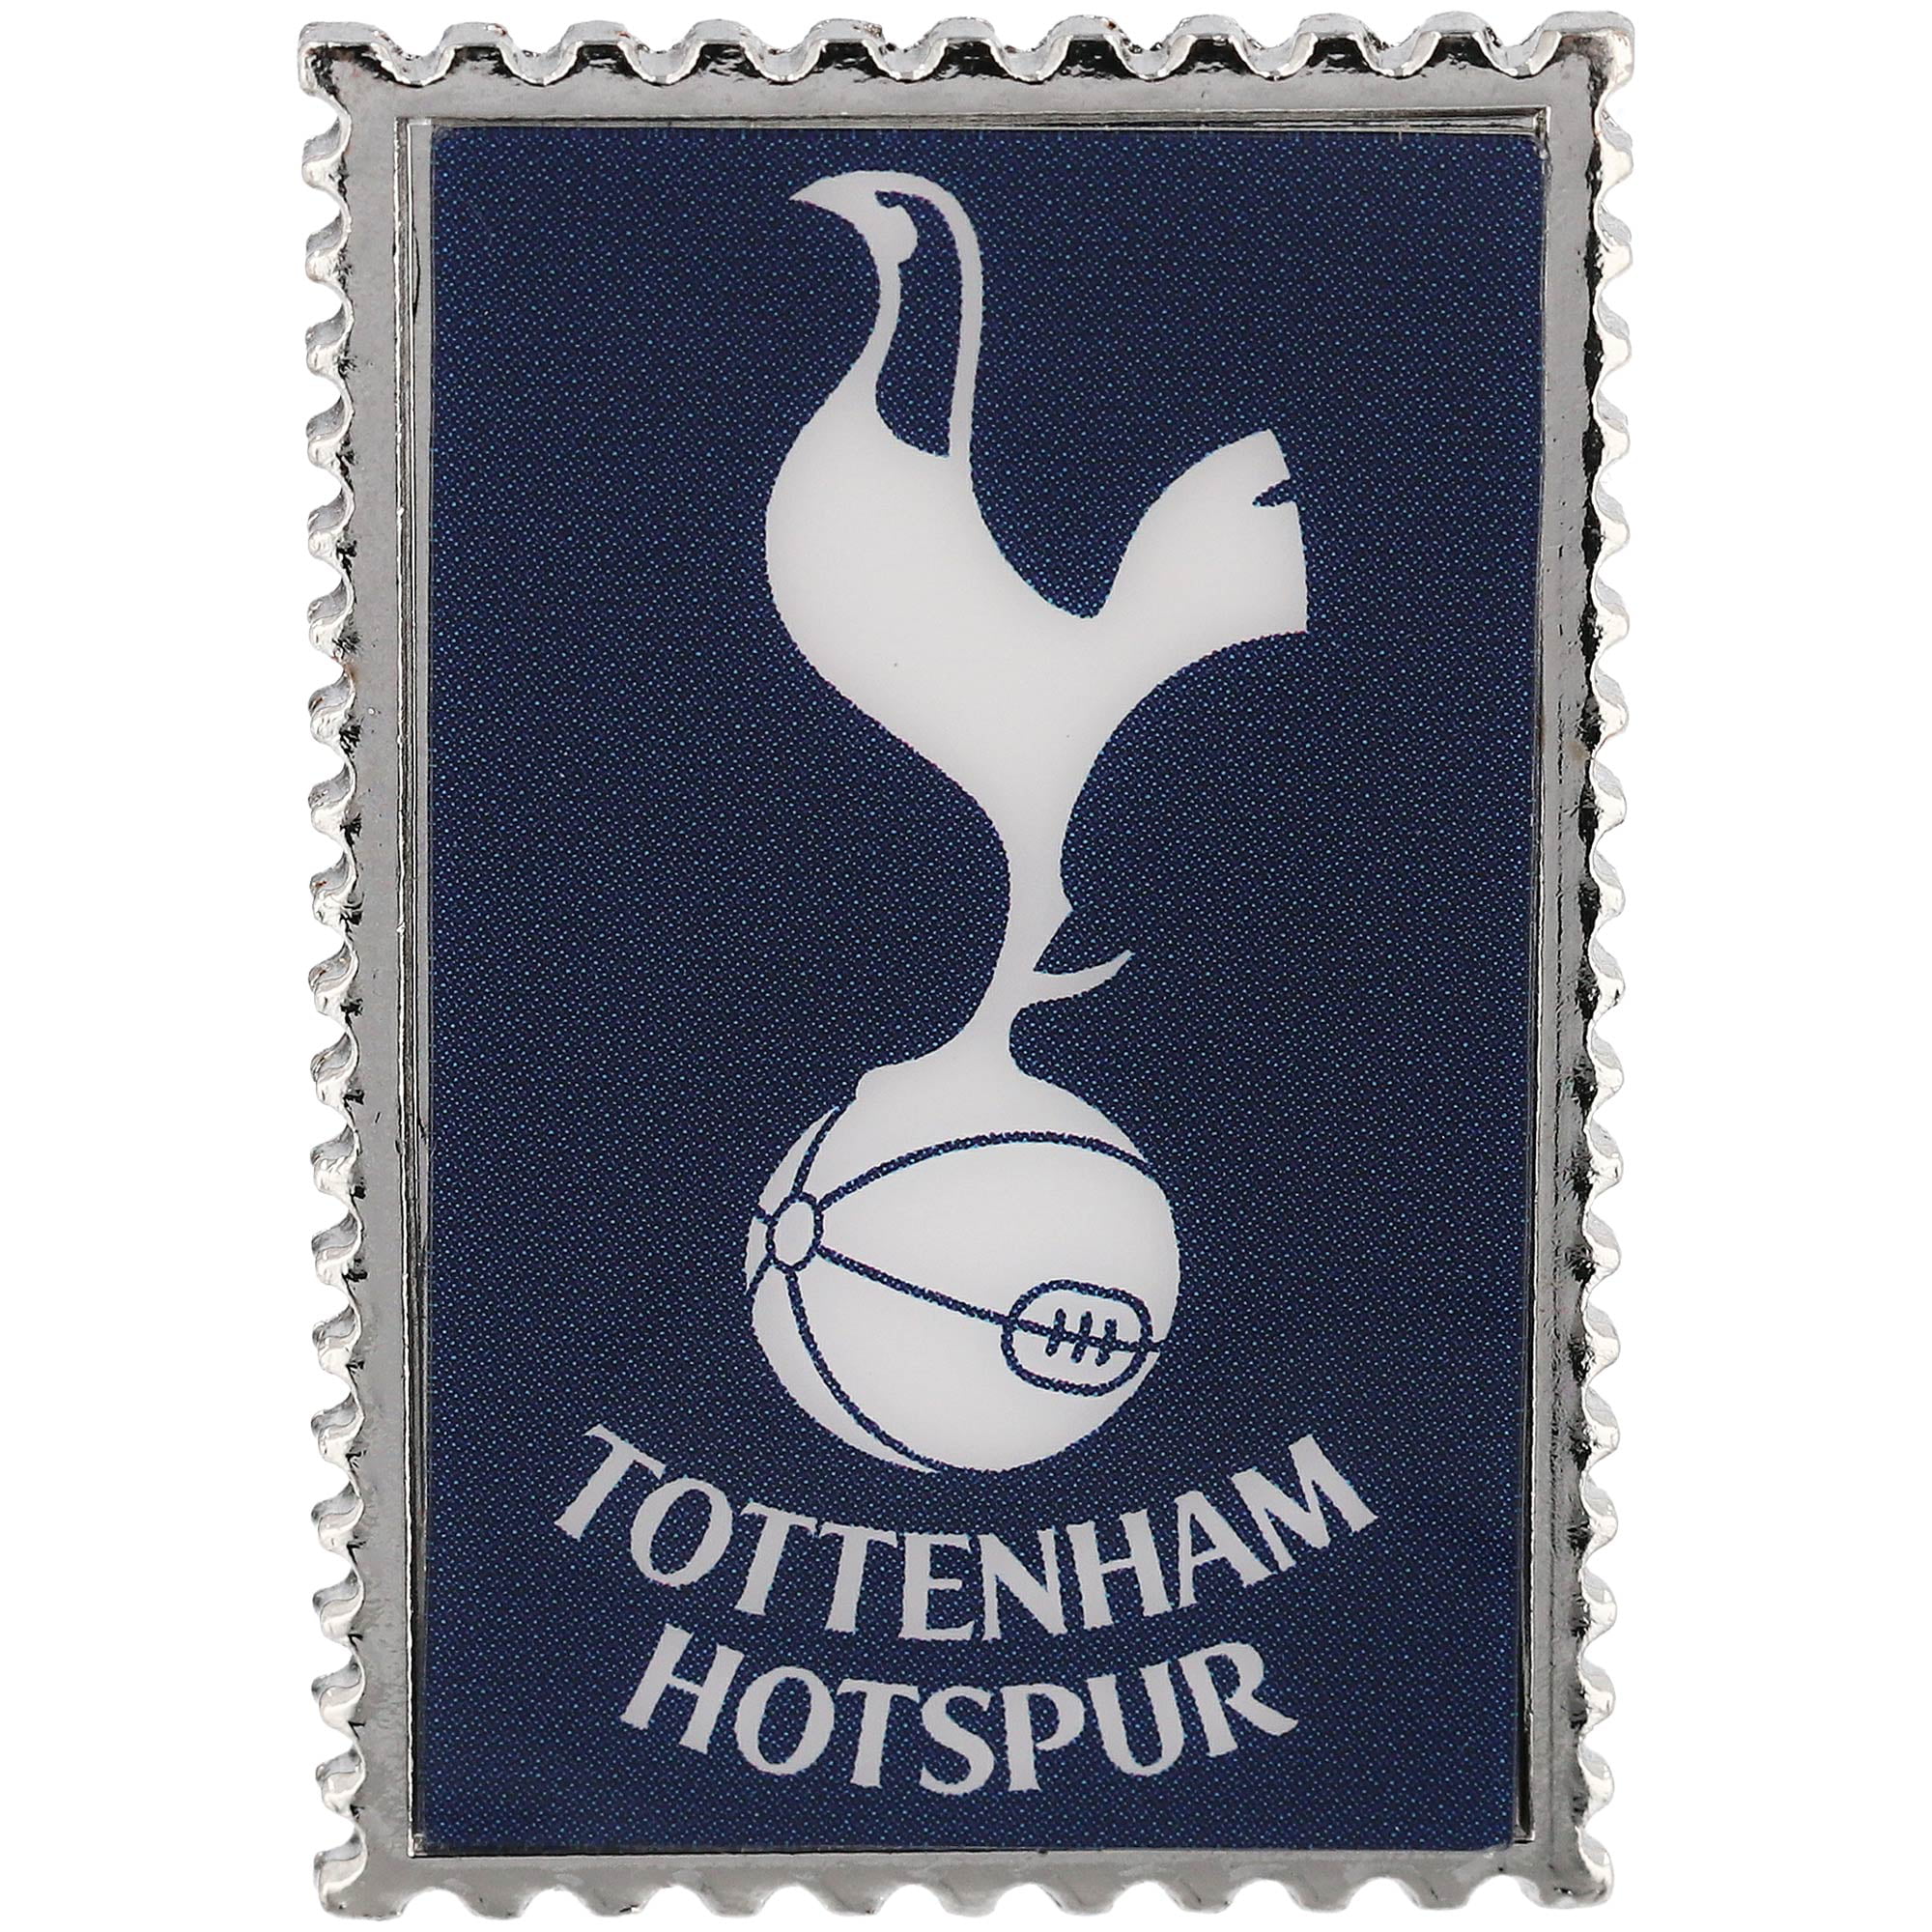 Tottenham White Hart Lane Stadium ~ 3D Jigsaw Puzzle ~ Official Licensed Product 